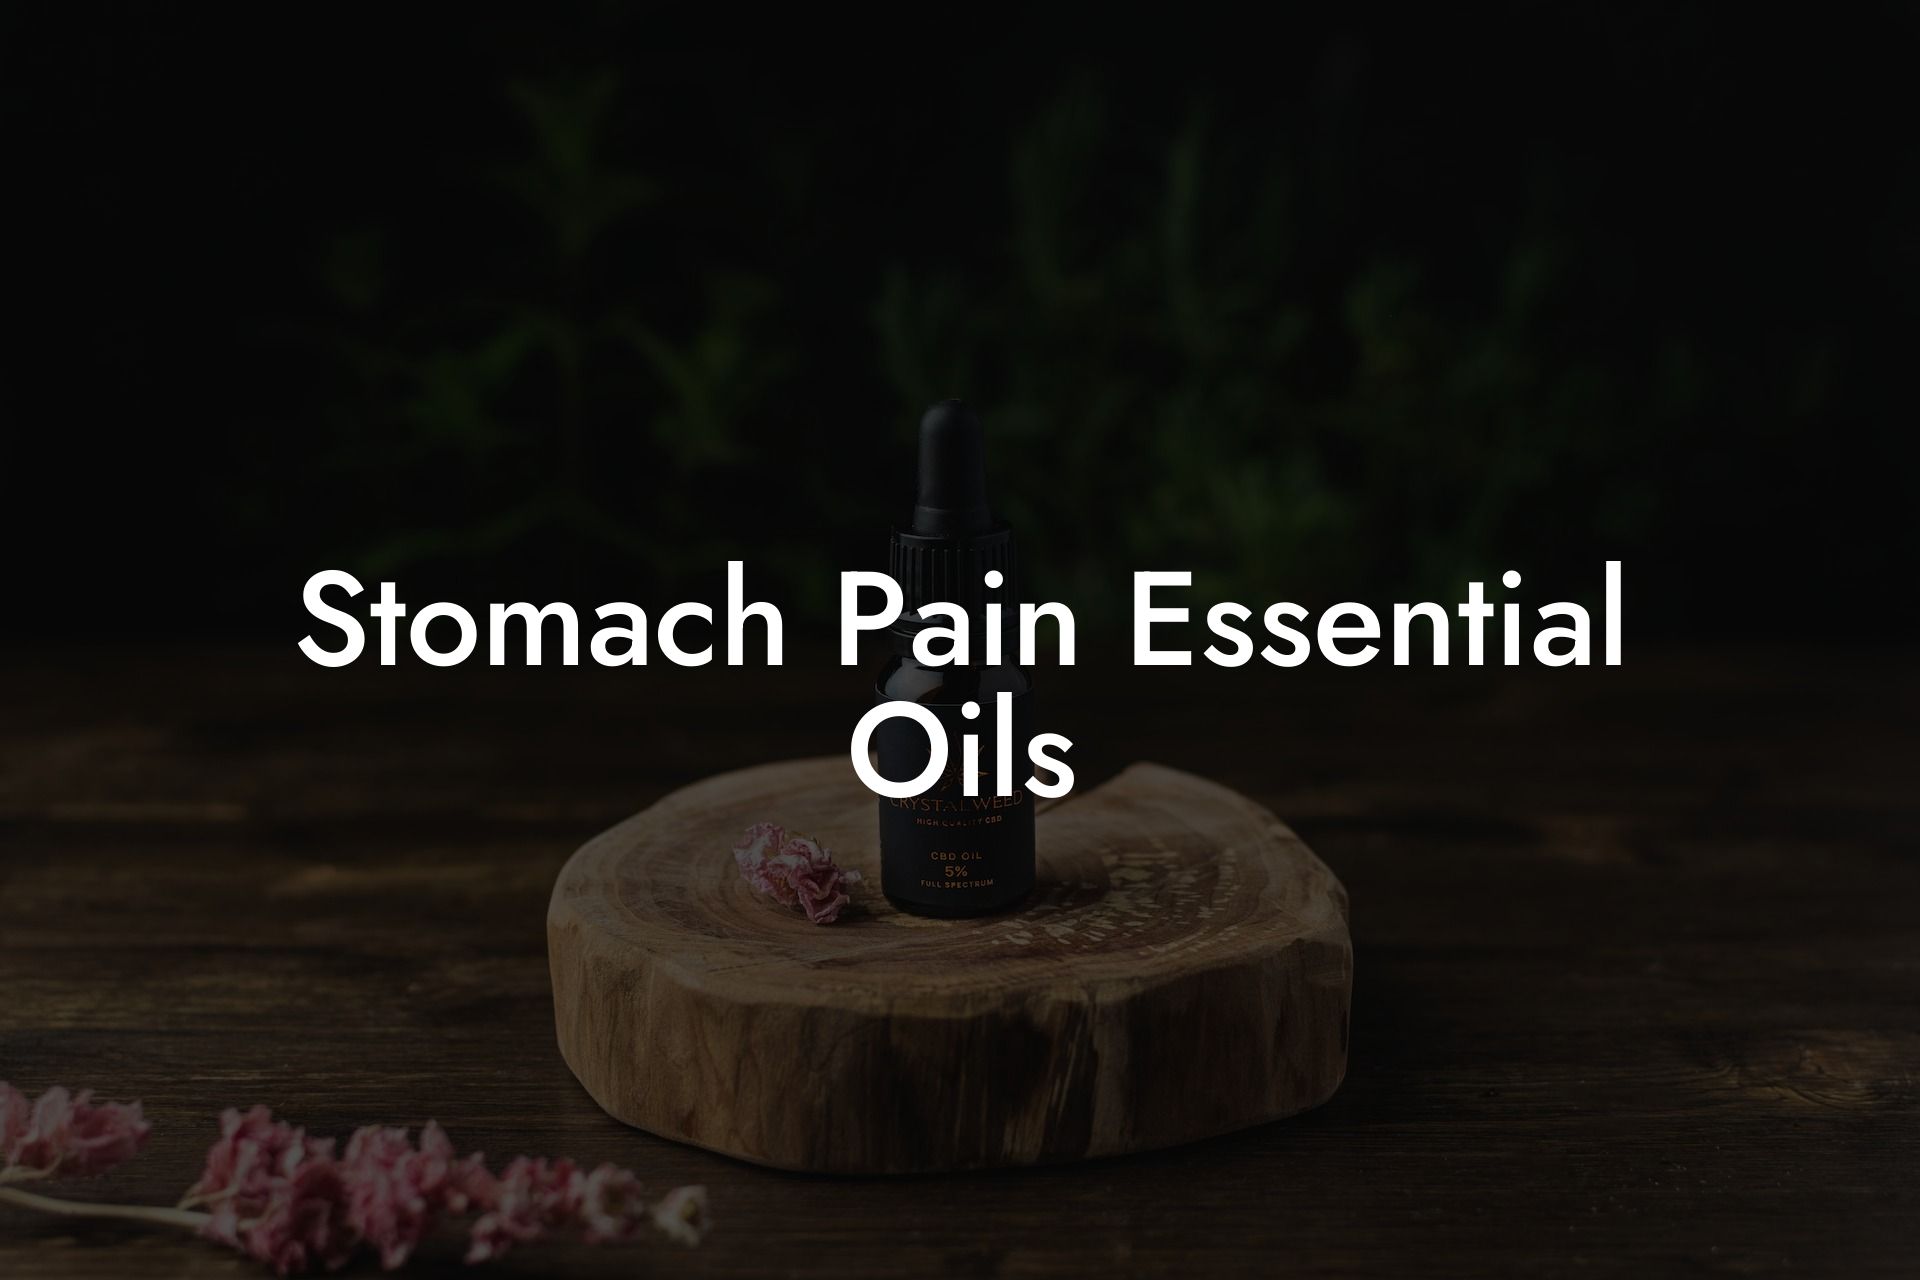 Stomach Pain Essential Oils